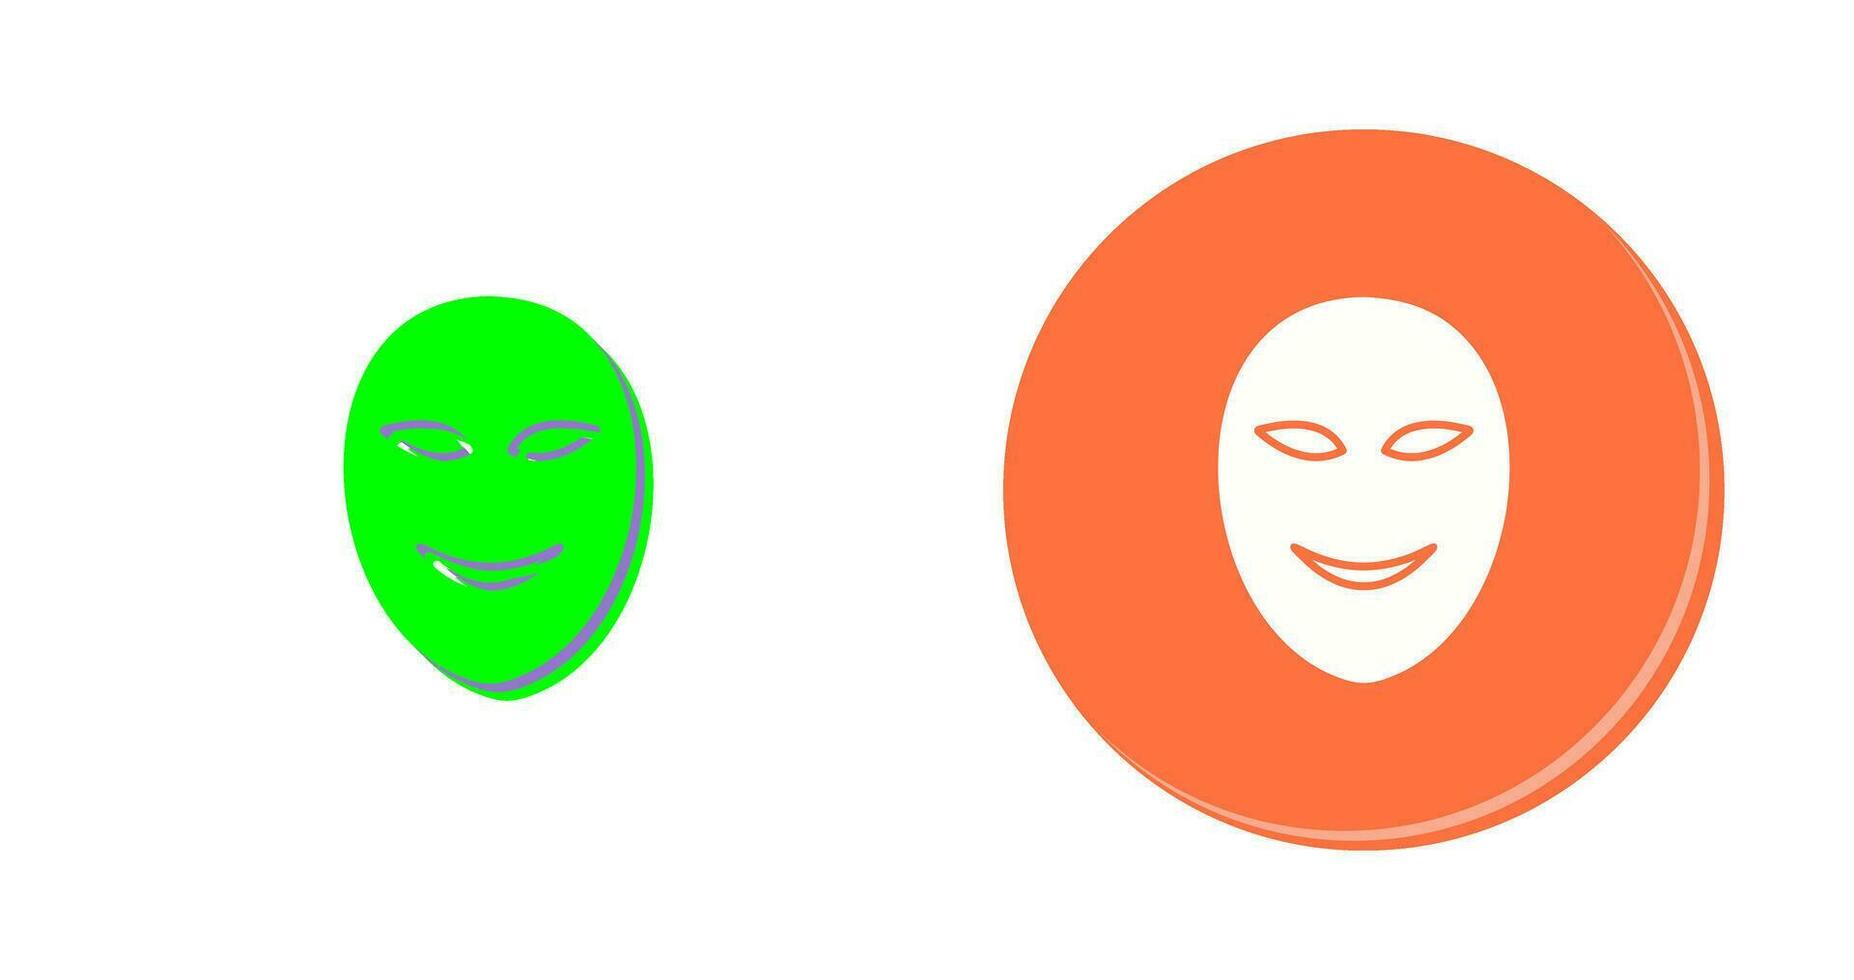 oude gezicht masker vector icoon